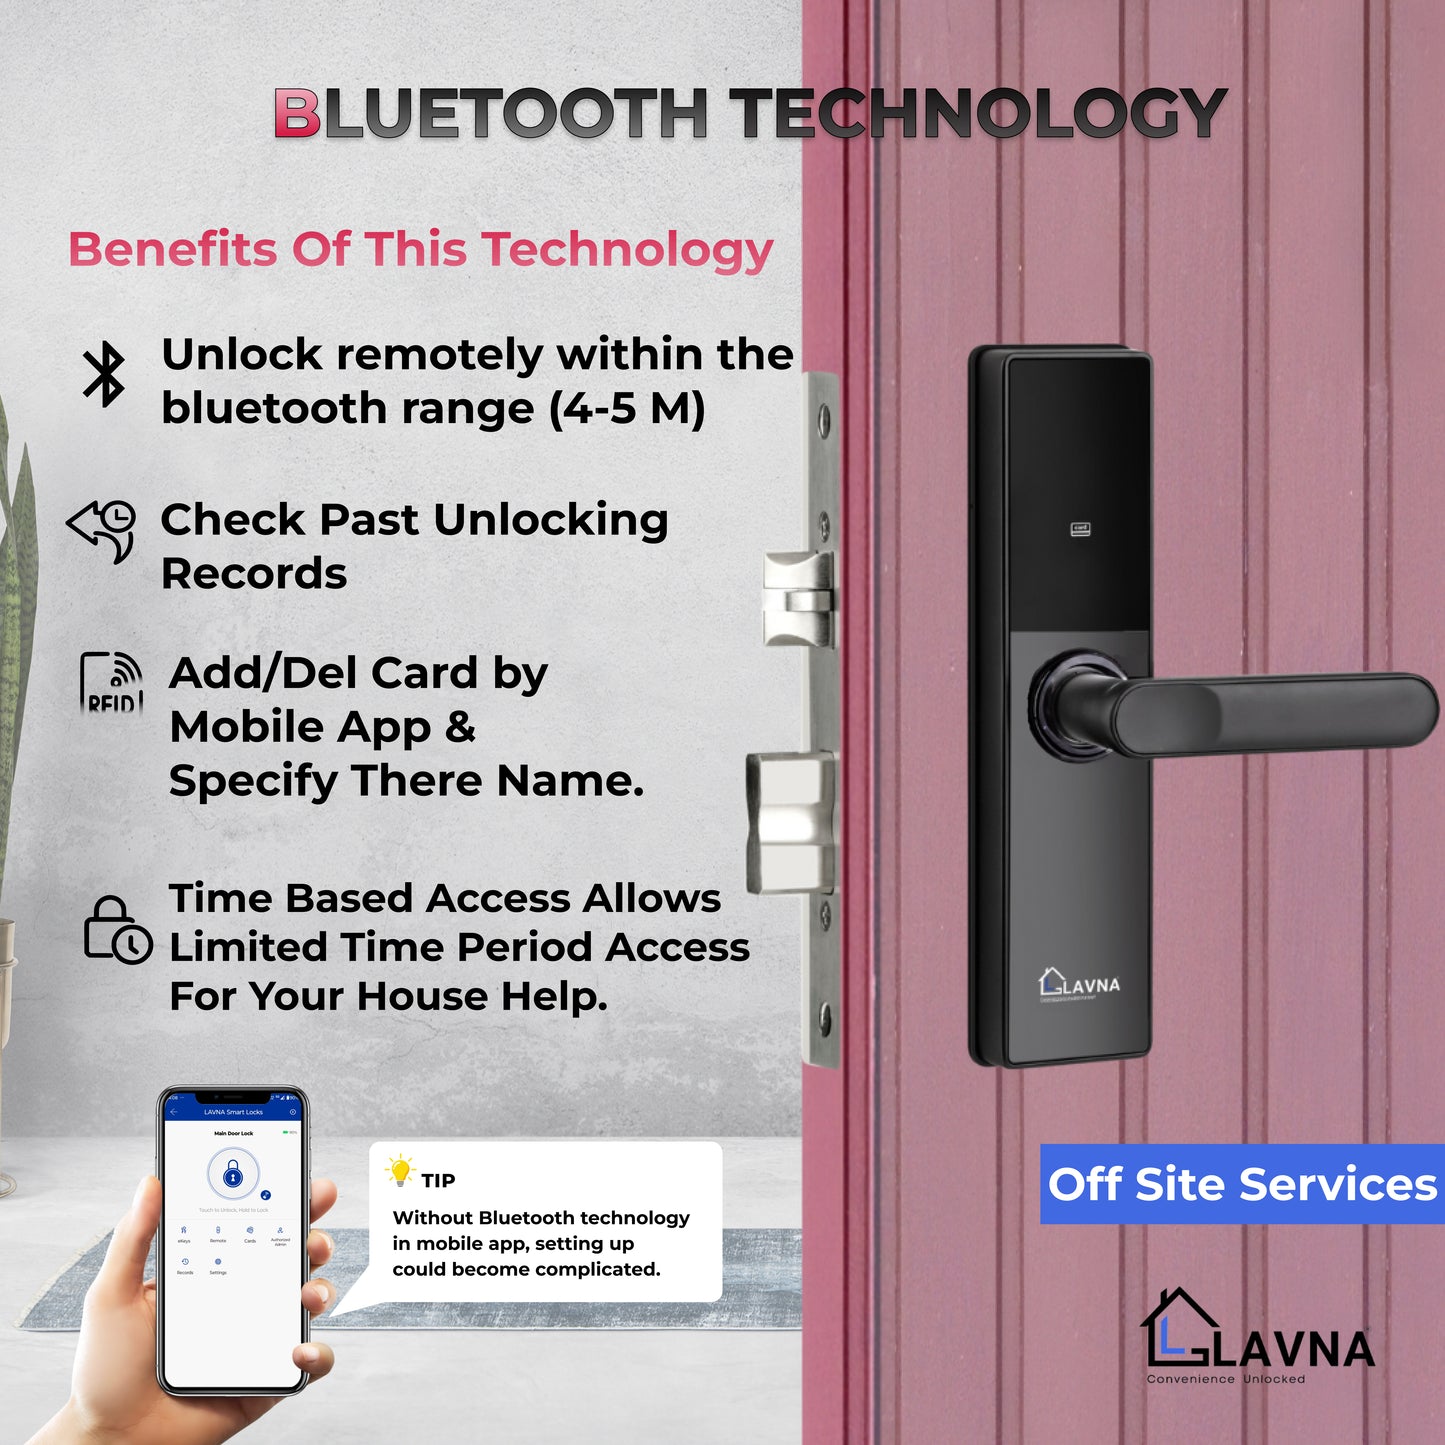 LAVNA Hotel Door lock with RFID Card & Manual Key Access for Hotel | Resort | PG room doors. - LH300 Black